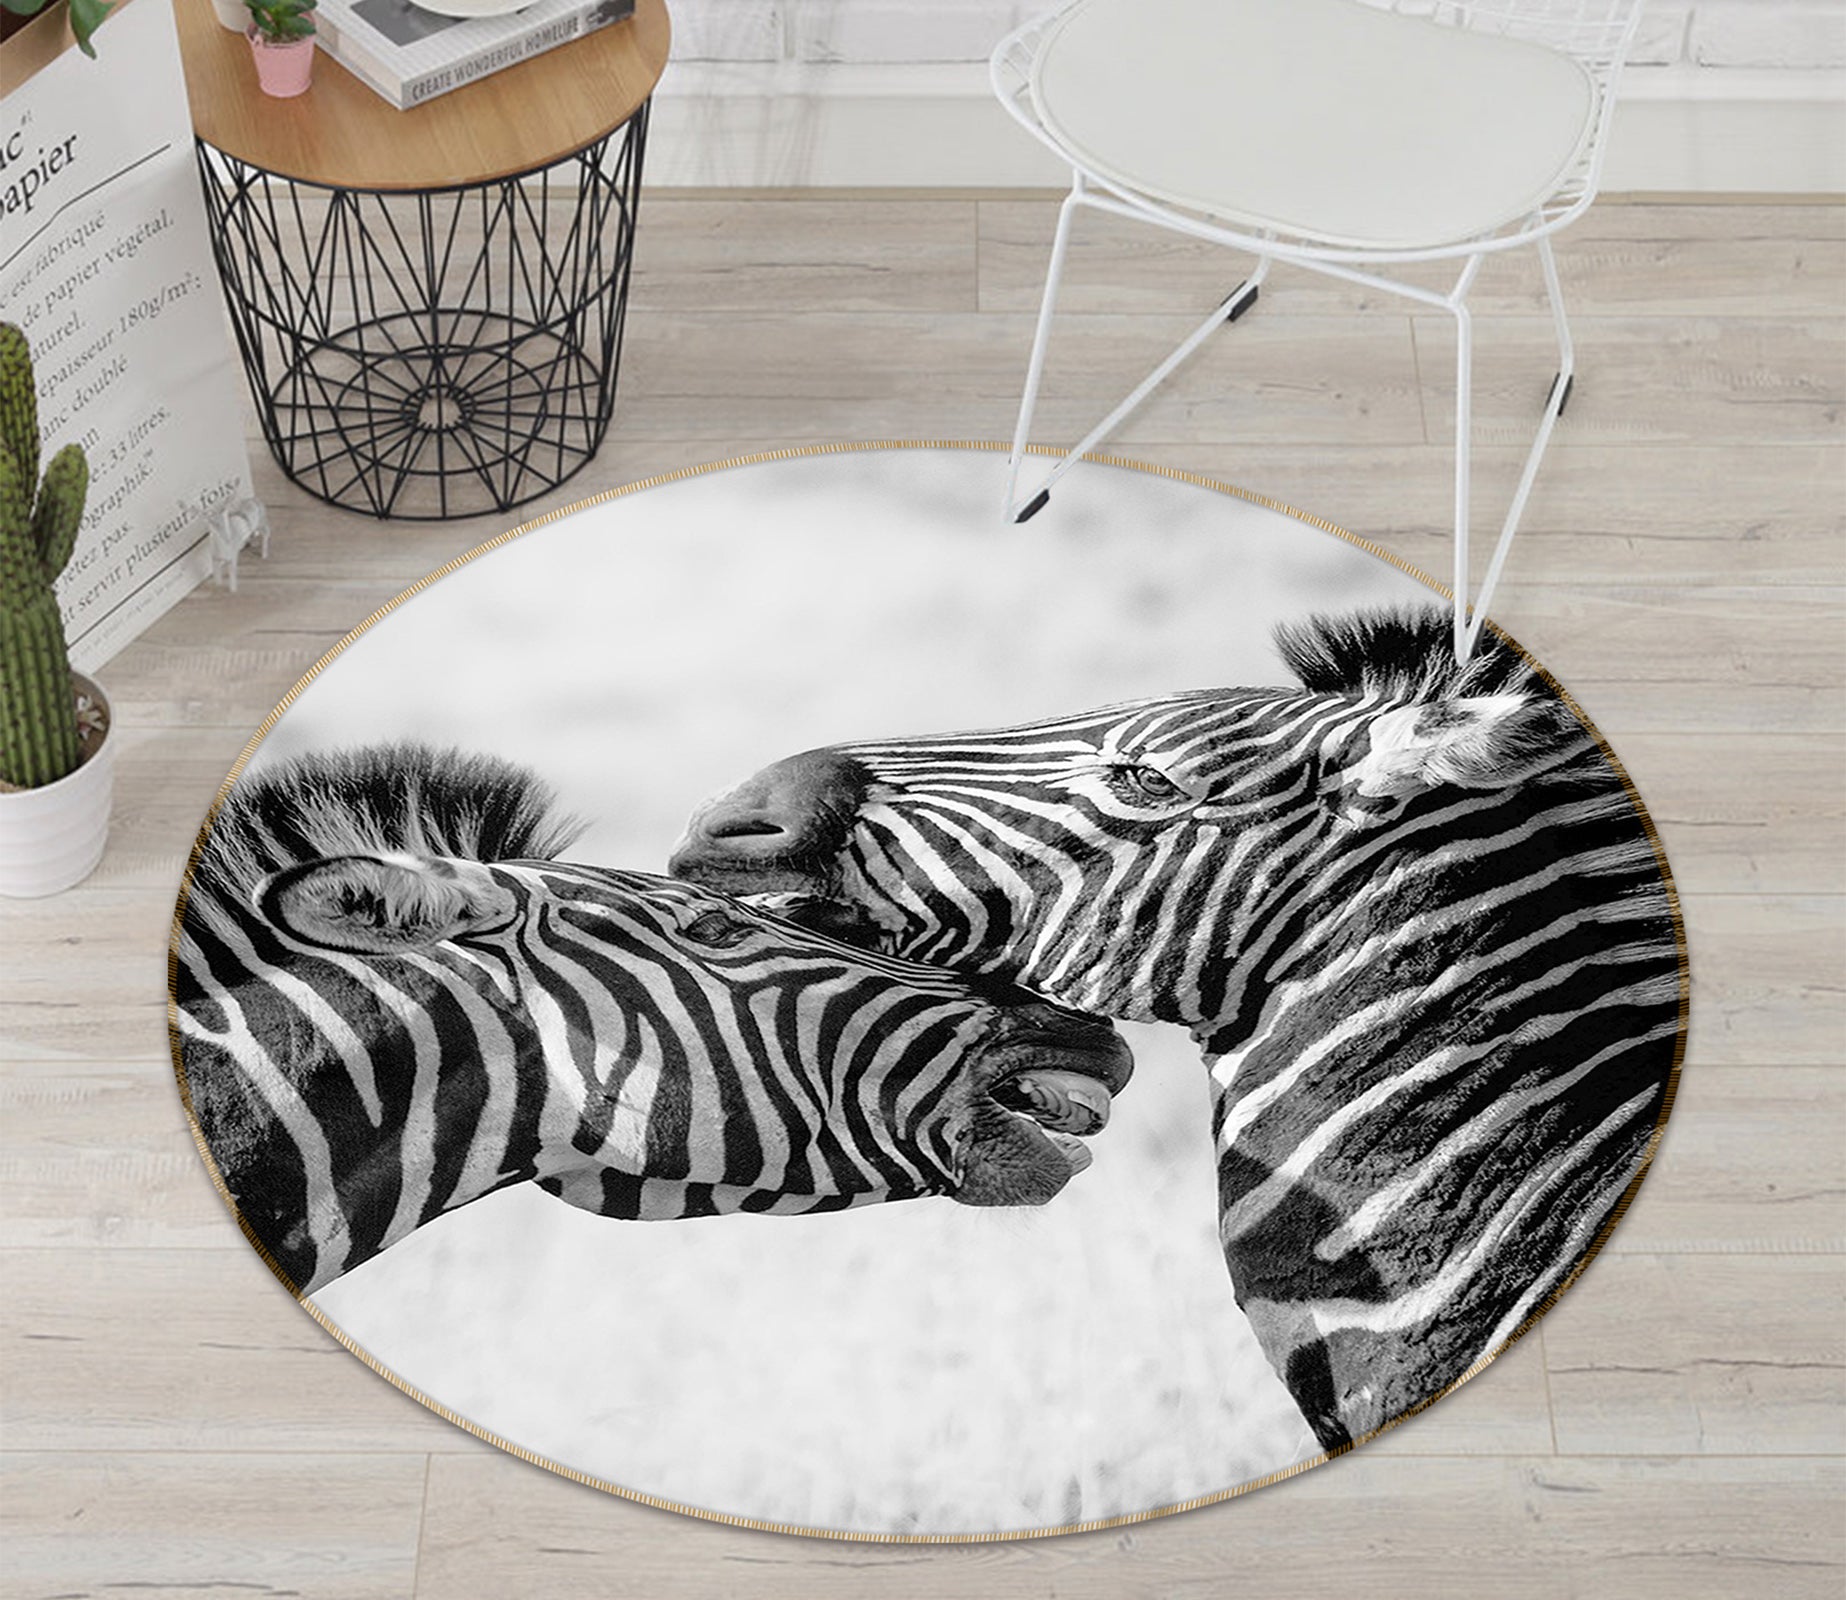 3D Zebras 82292 Animal Round Non Slip Rug Mat